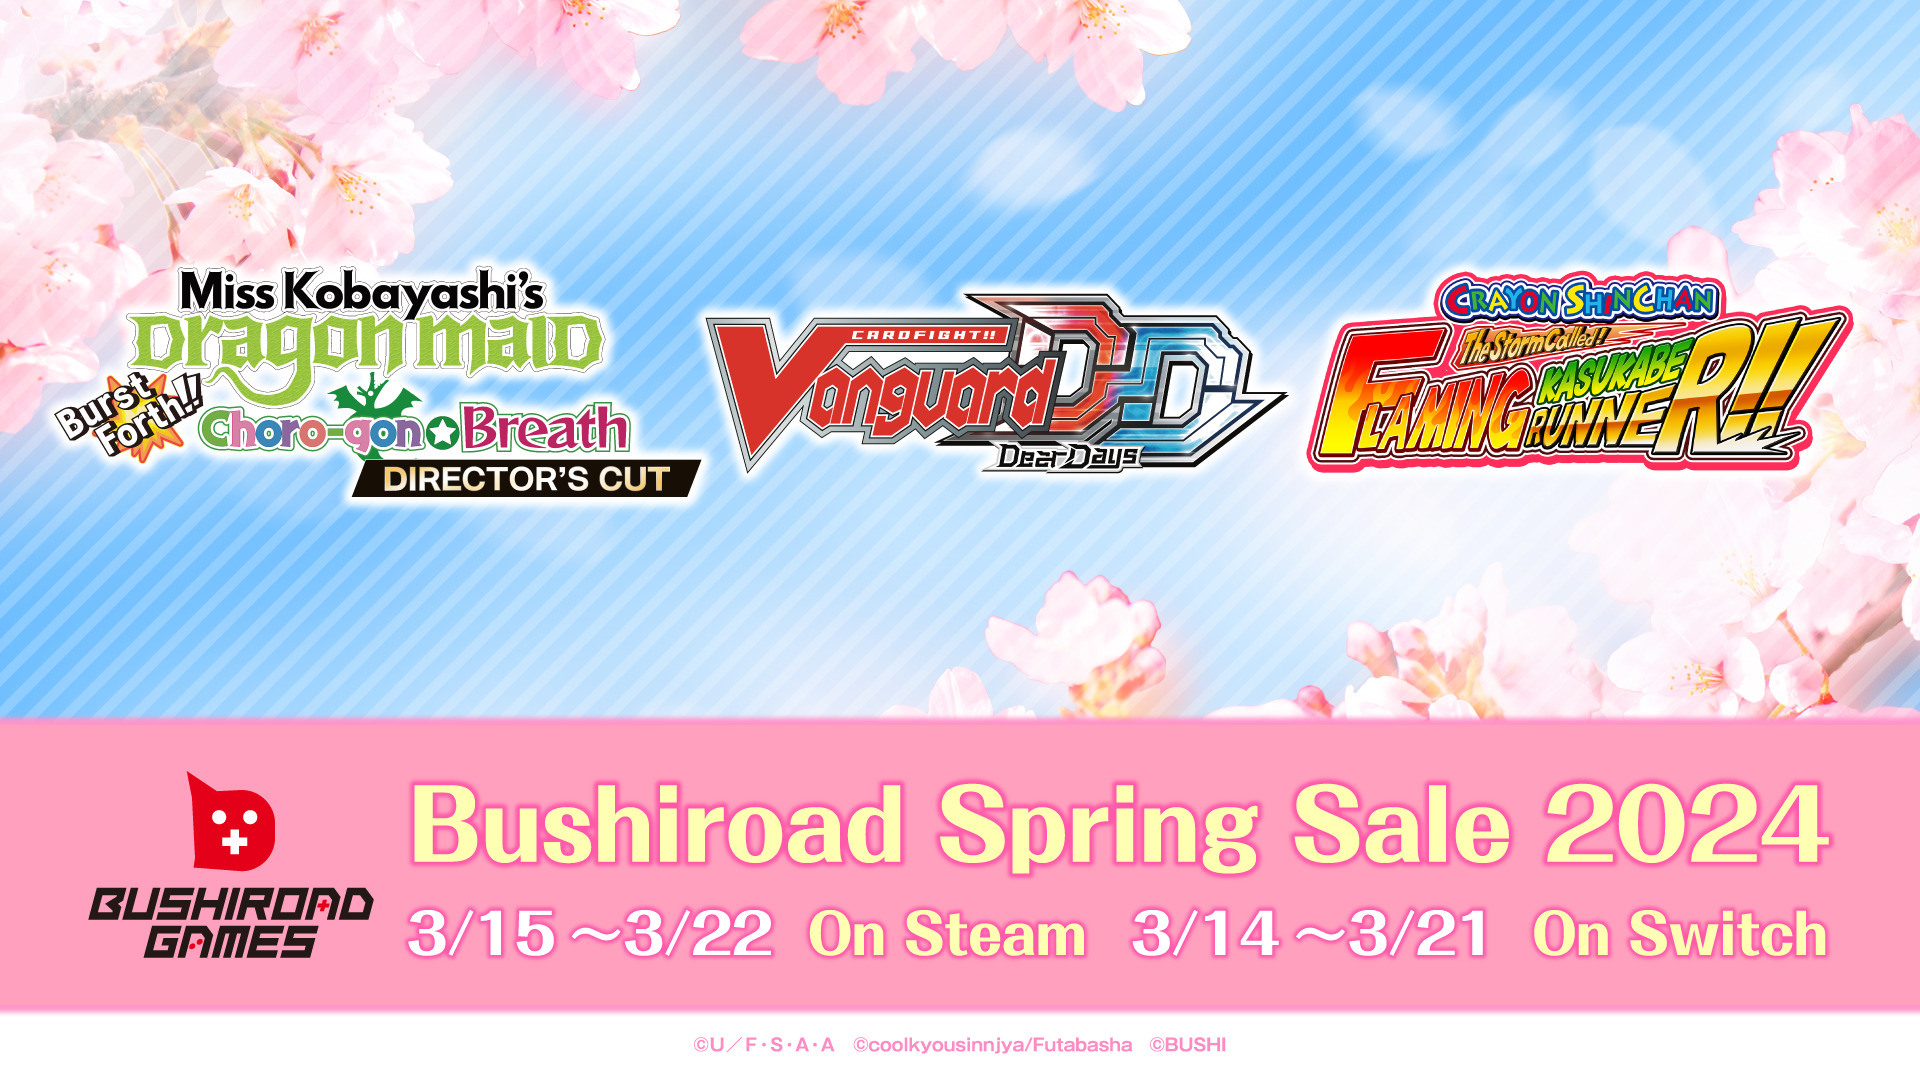 Console Games（digital version）Sale 【BUSHIROAD GAMES Spring Sale 2024】